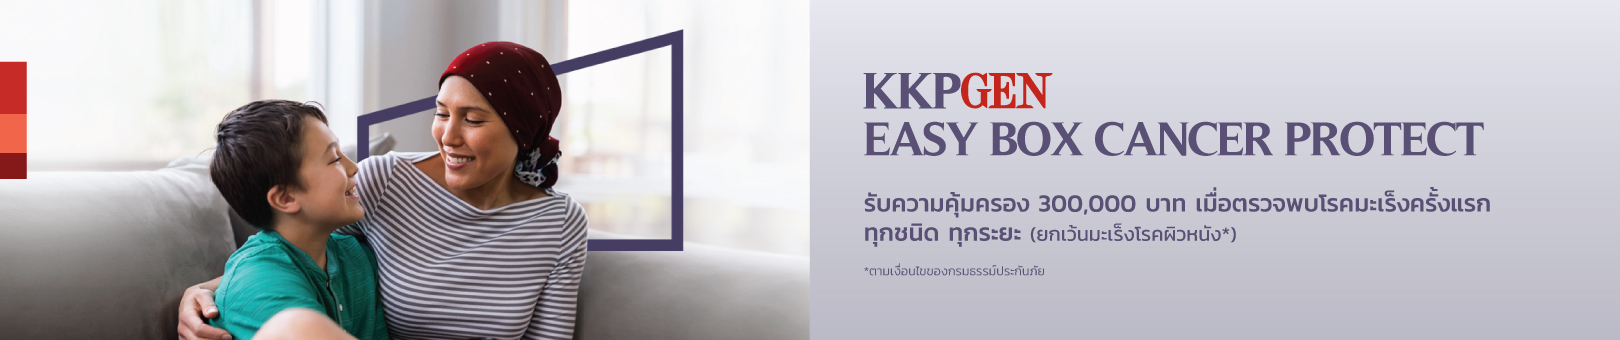 KKPGEN-Easy-Box-Cancer-Protect-1620x340p